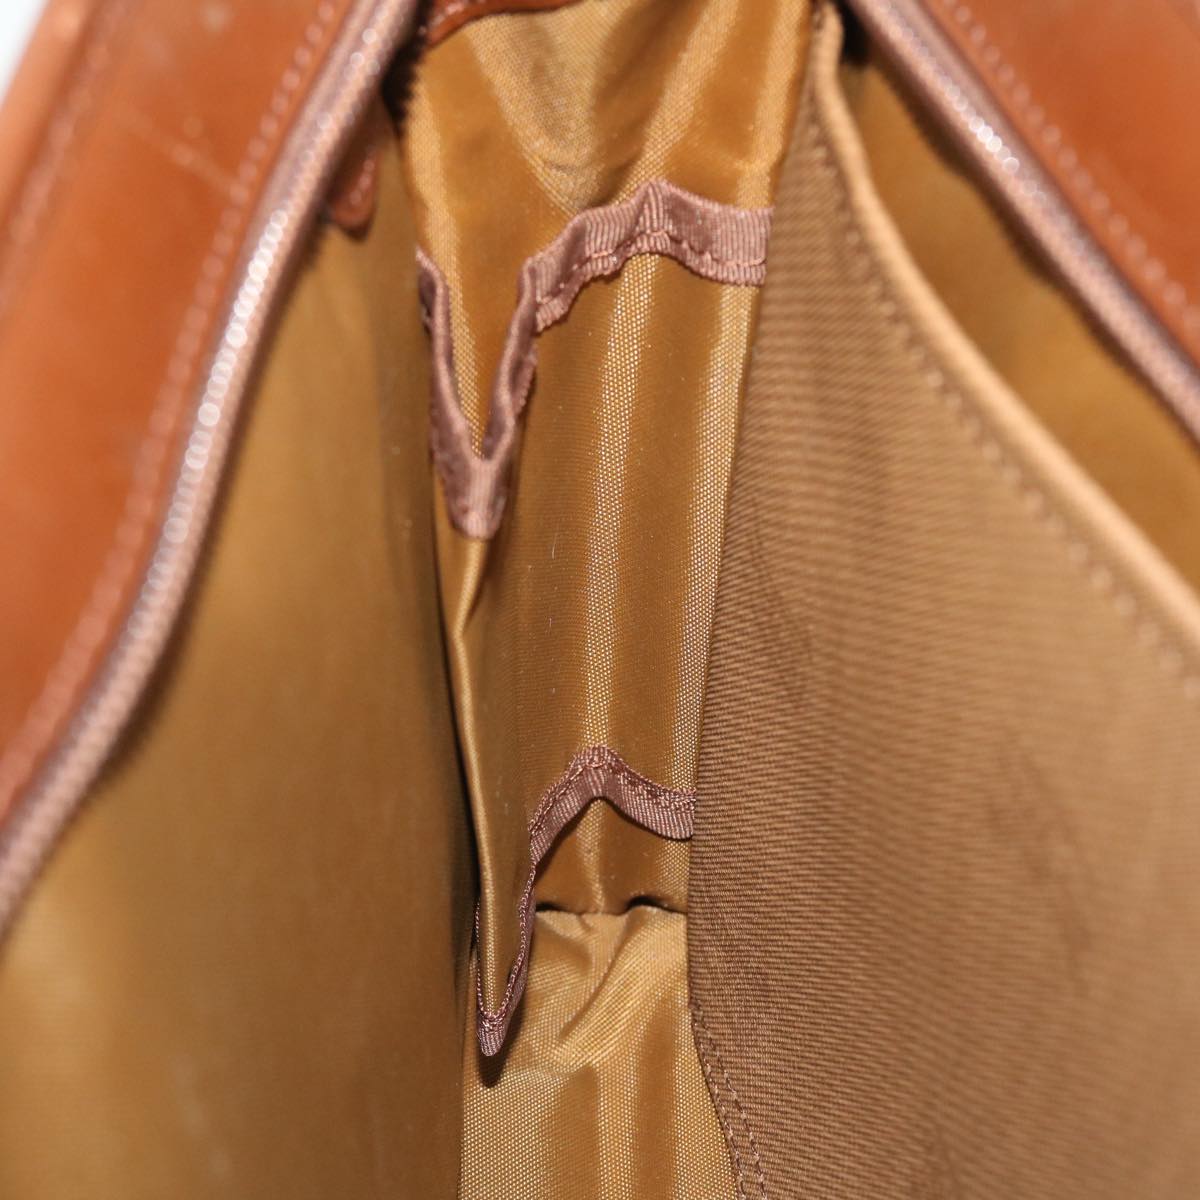 Burberrys Nova Check Clutch Bag Canvas Leather Brown Beige Auth bs7696